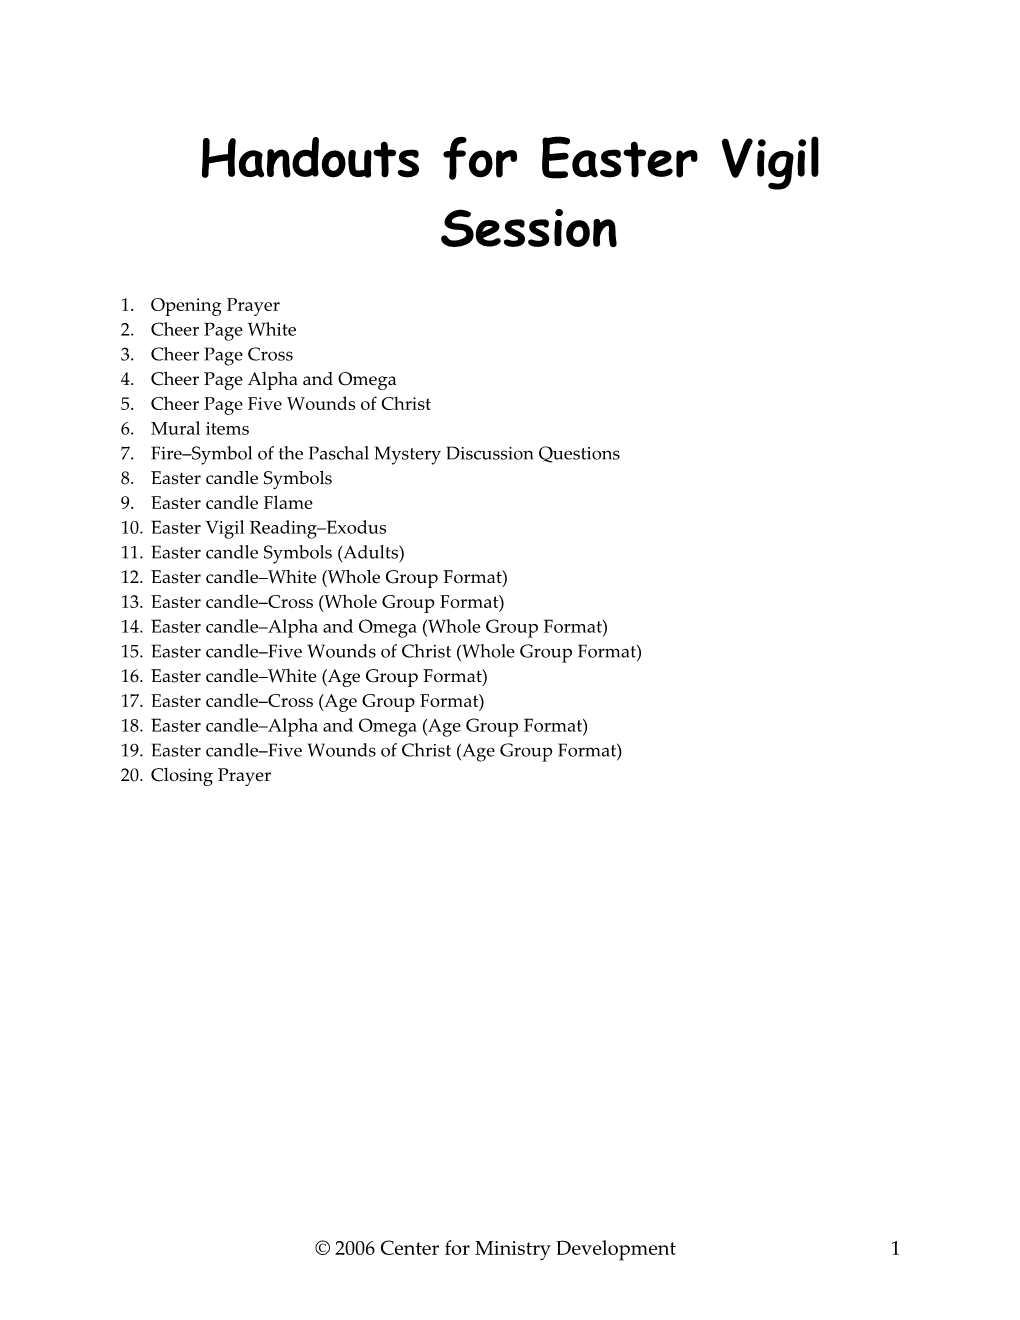 Handouts for Easter Vigil Session